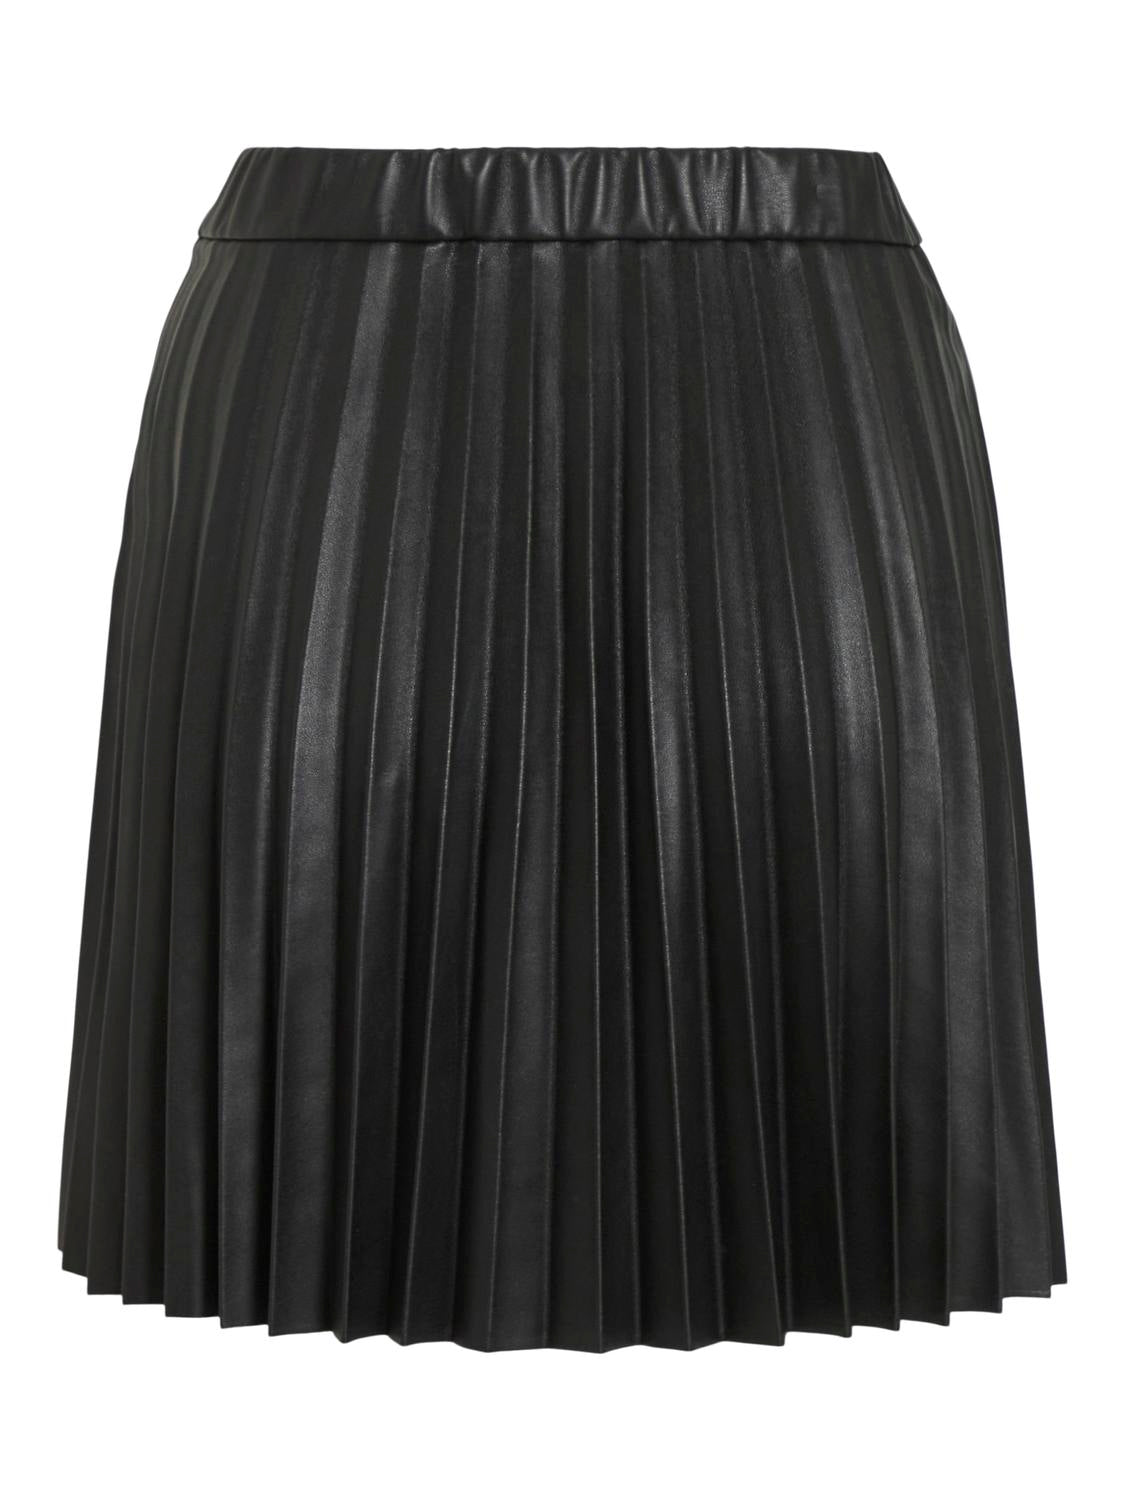 VIMIRIAM Skirt - Black